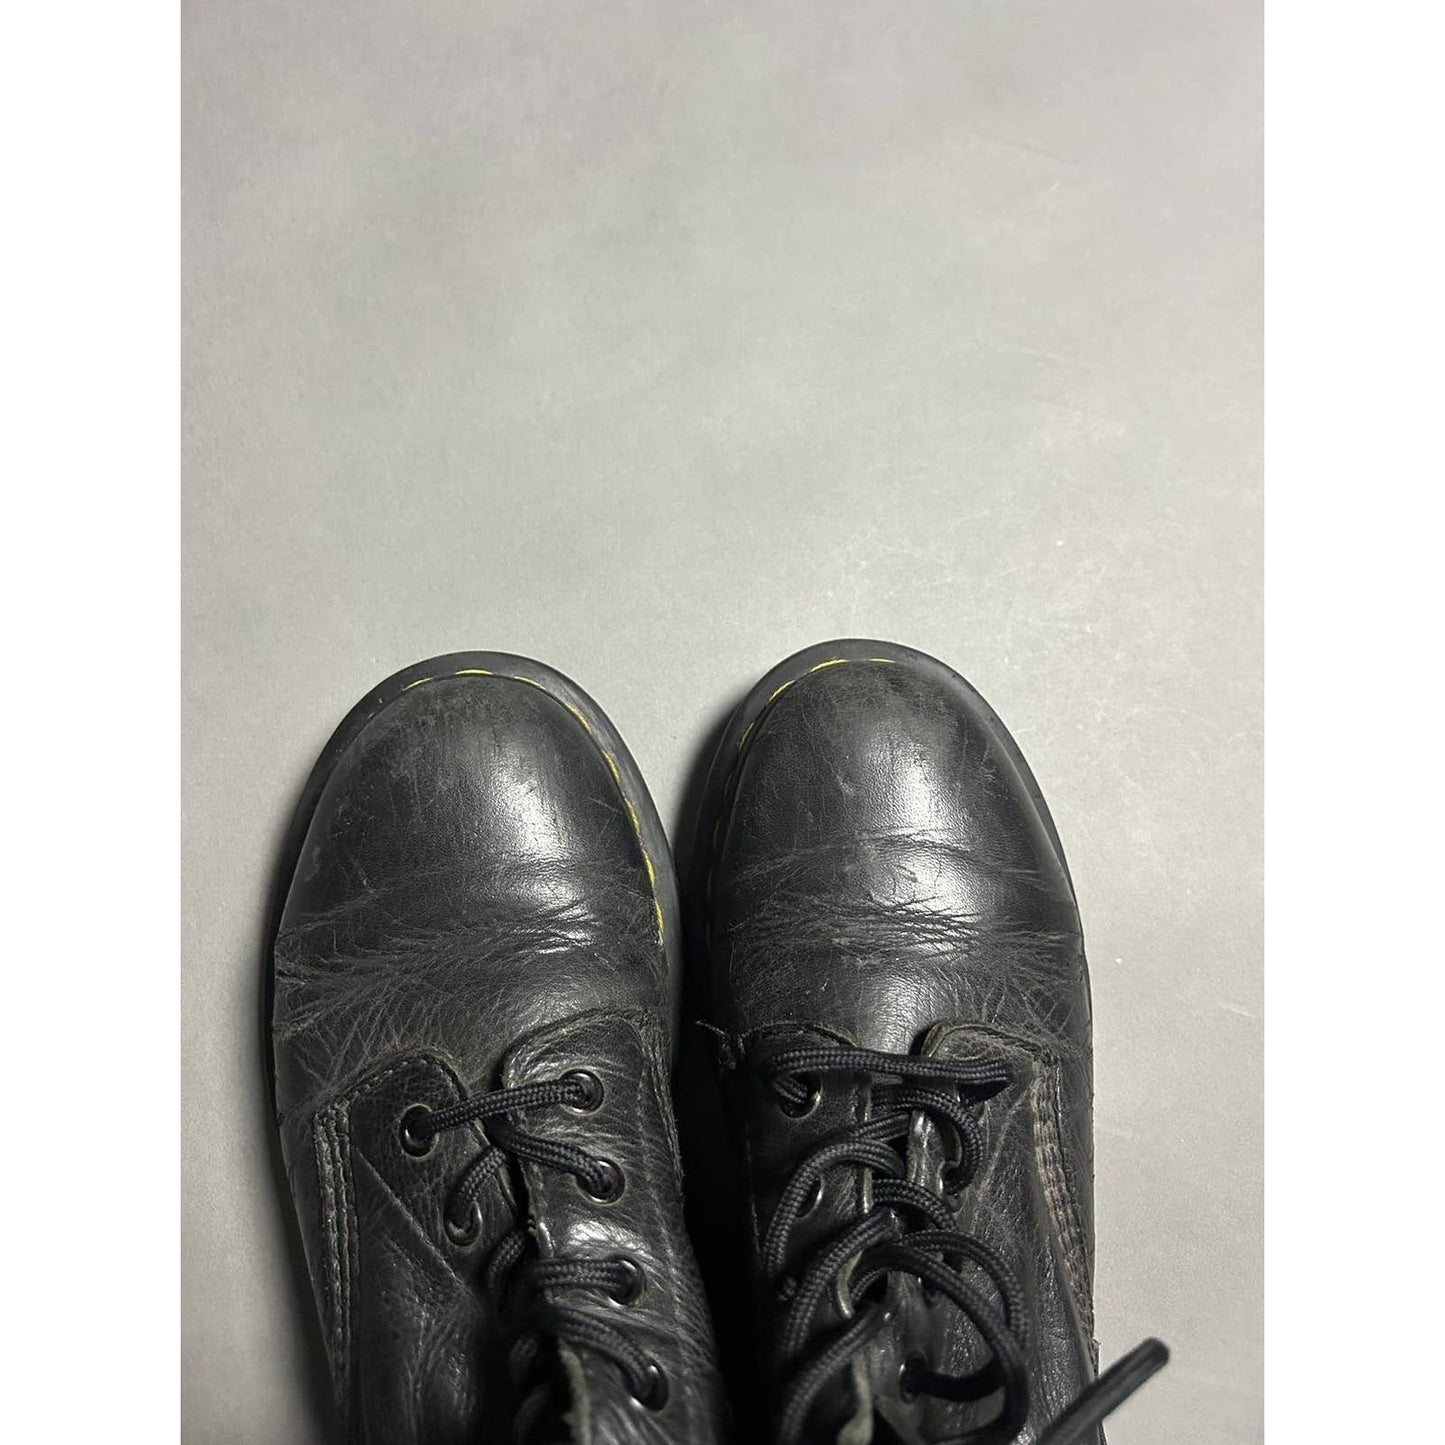 Dr. Martens boots 1460 black